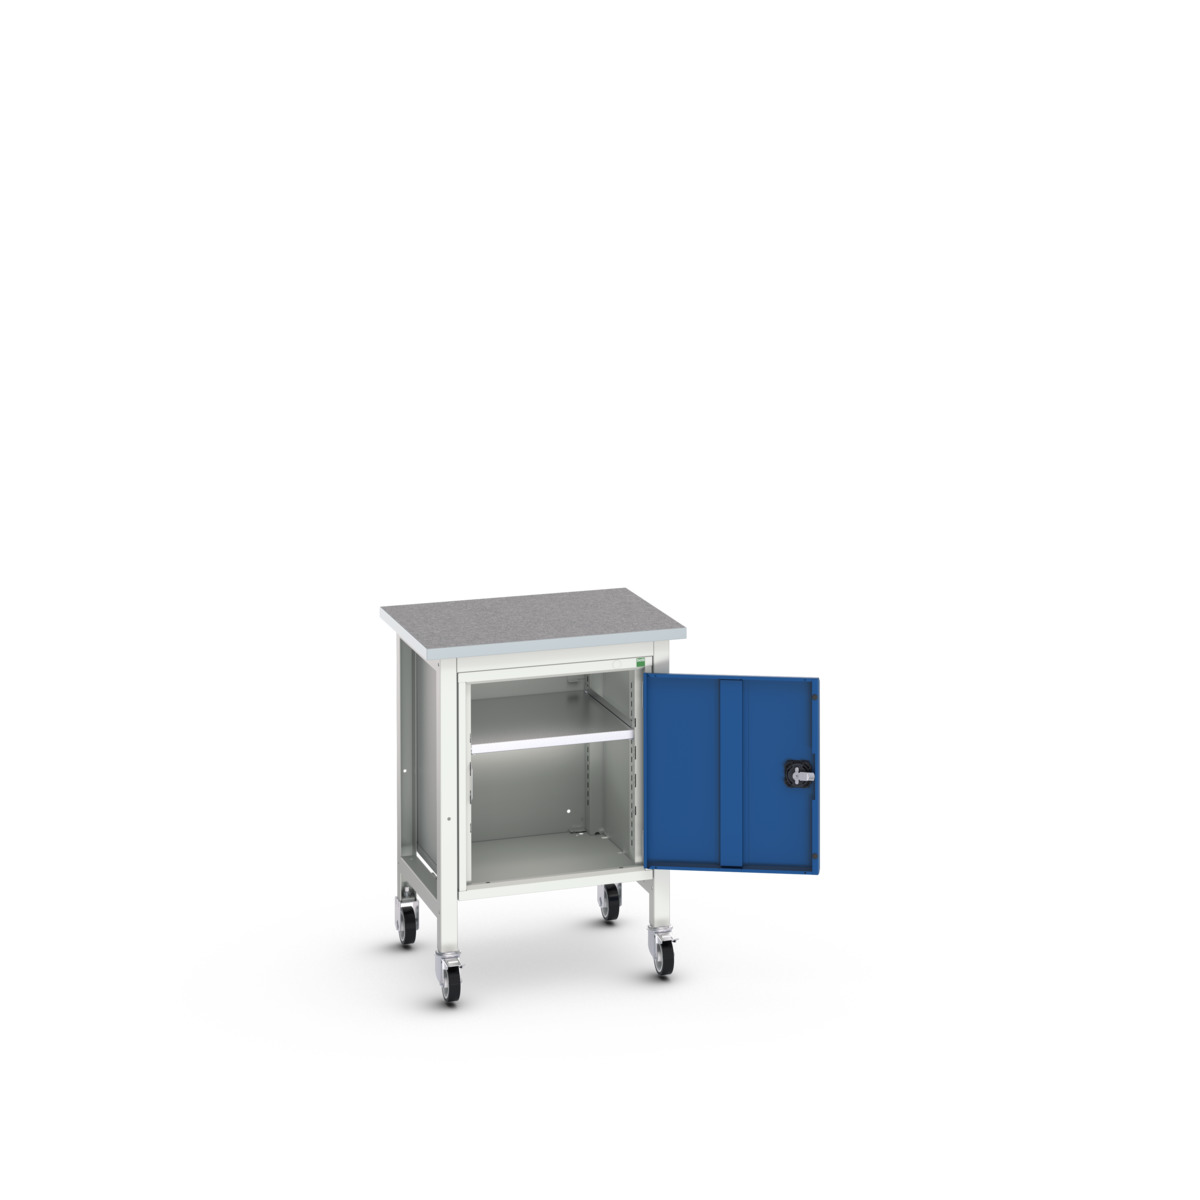 16922203.11 - verso mobile workstand